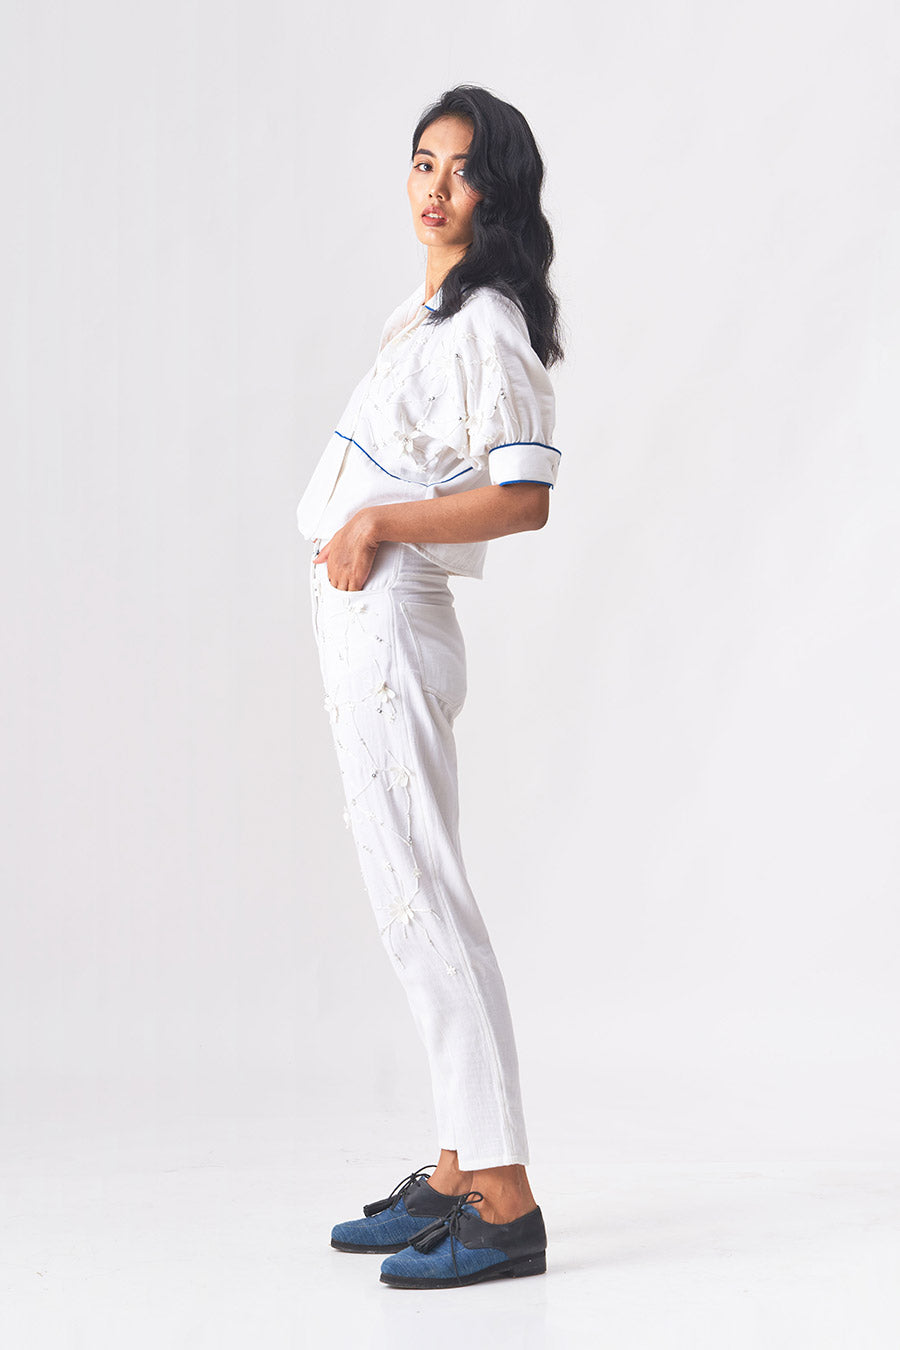 TATUM - 3D Embroidered White Denim Pants